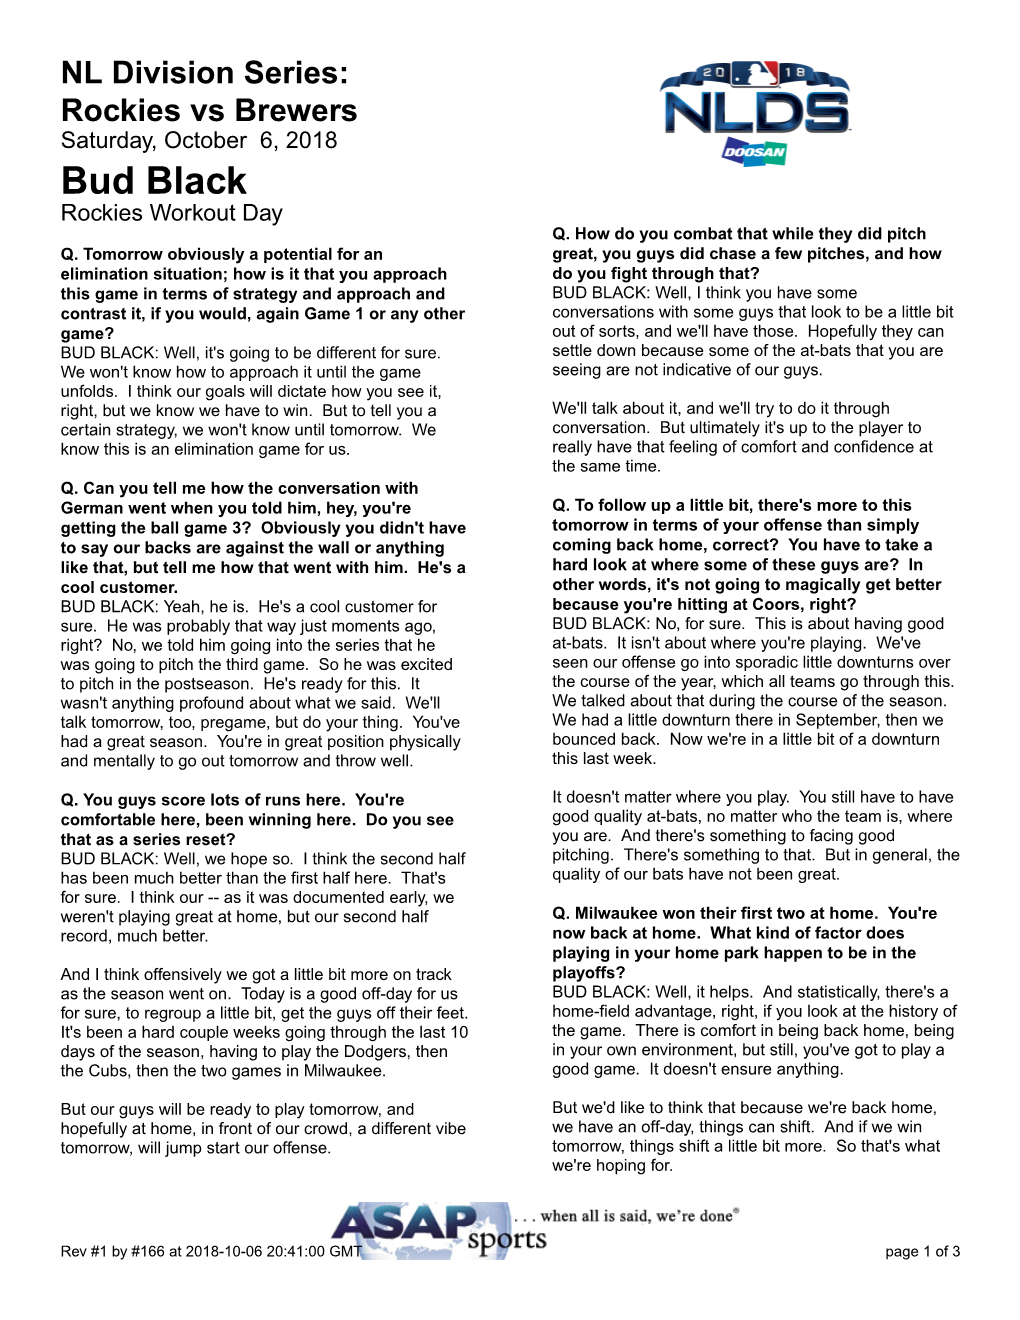 Bud Black Rockies Workout Day Q